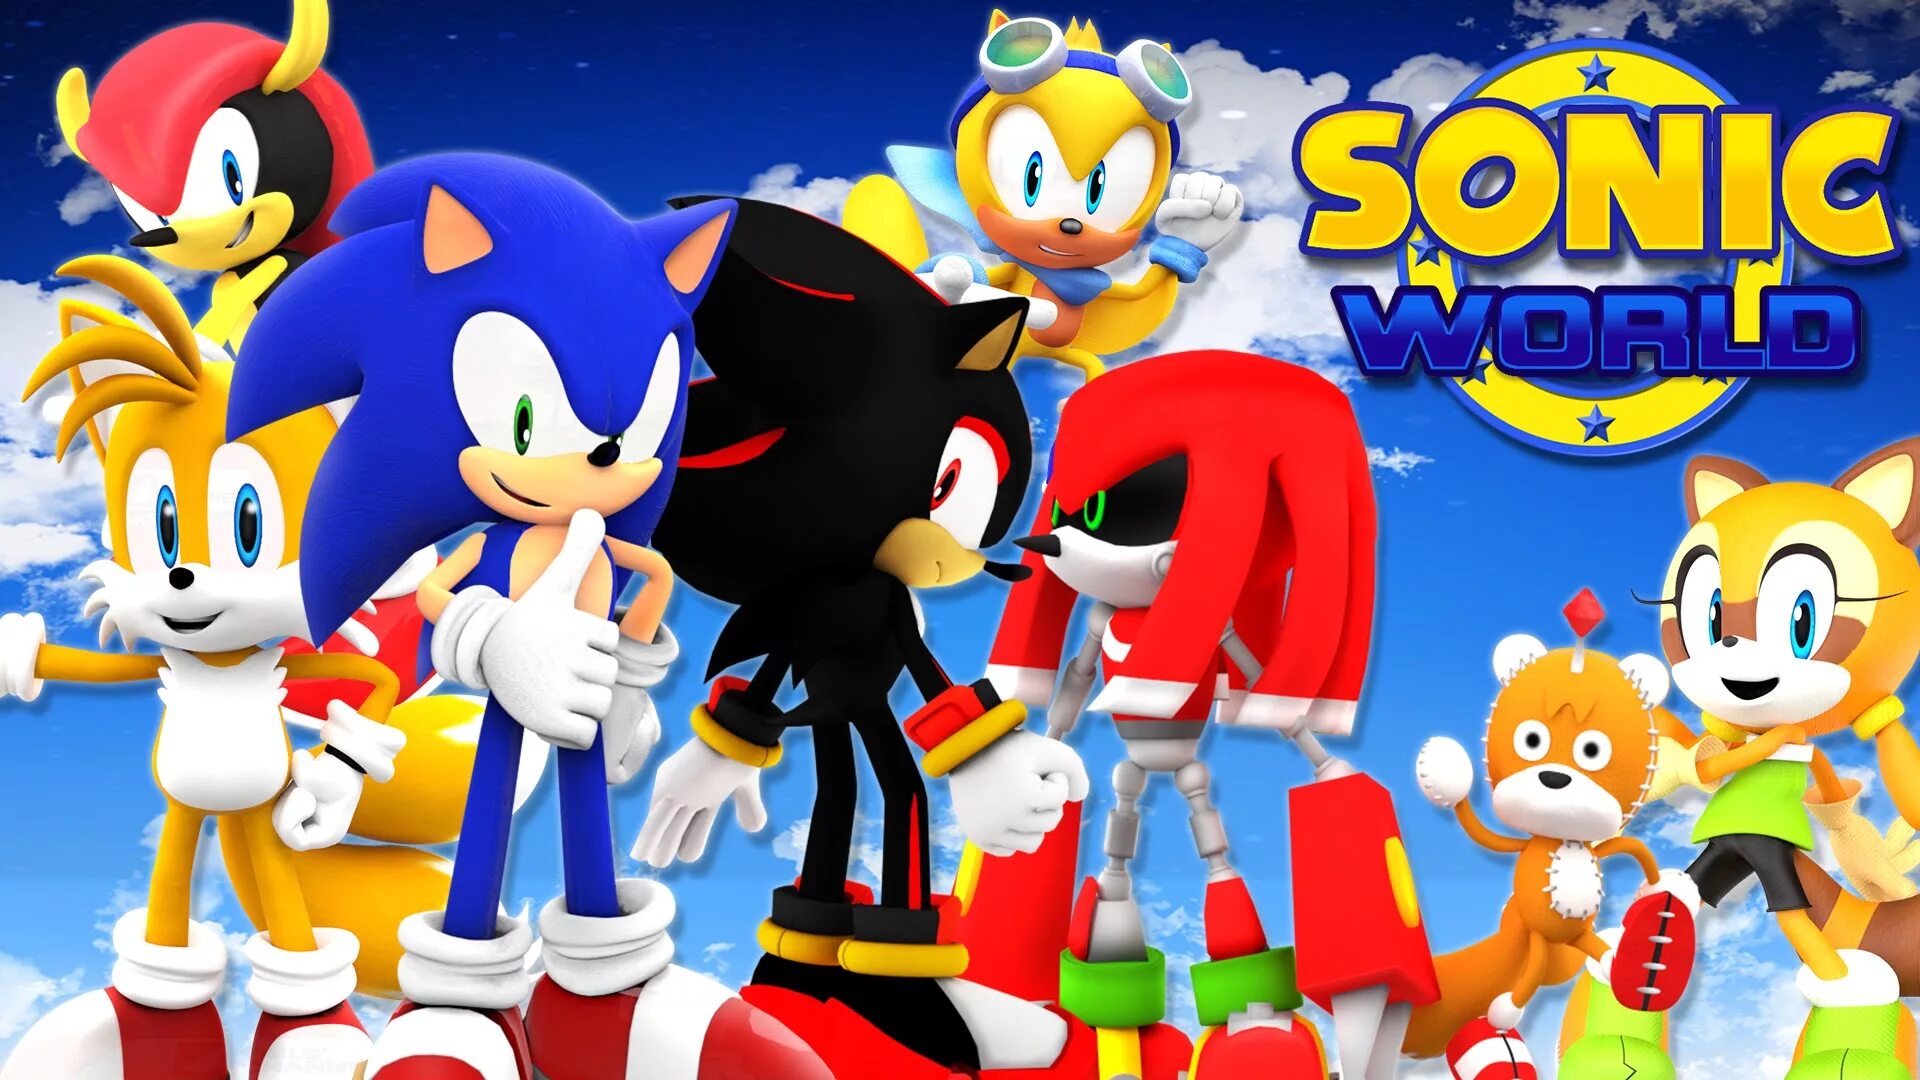 Там соник игра. Соник хеджхог. Sonic the Hedgehog (игра, 2006). Соник игра картинки. Игры Sonic игры Sonic.